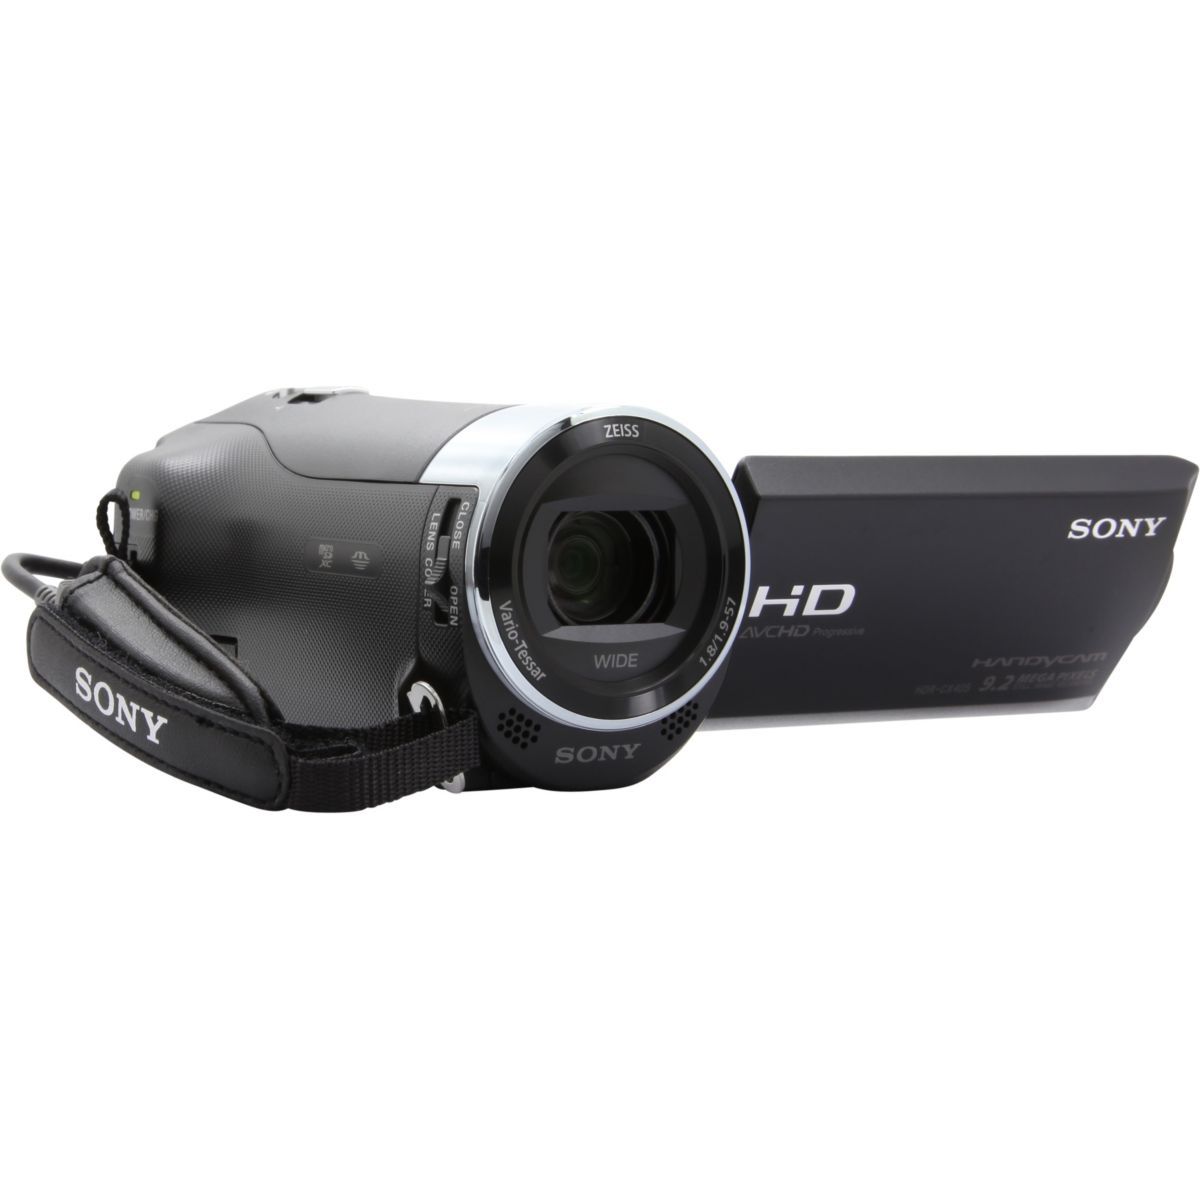 Sony cx405 купить. Sony HDR-cx405. Sony Handycam HDR-cx405. Видеокамера Sony 405. Sony HDR-cx405 внешний микрофон.